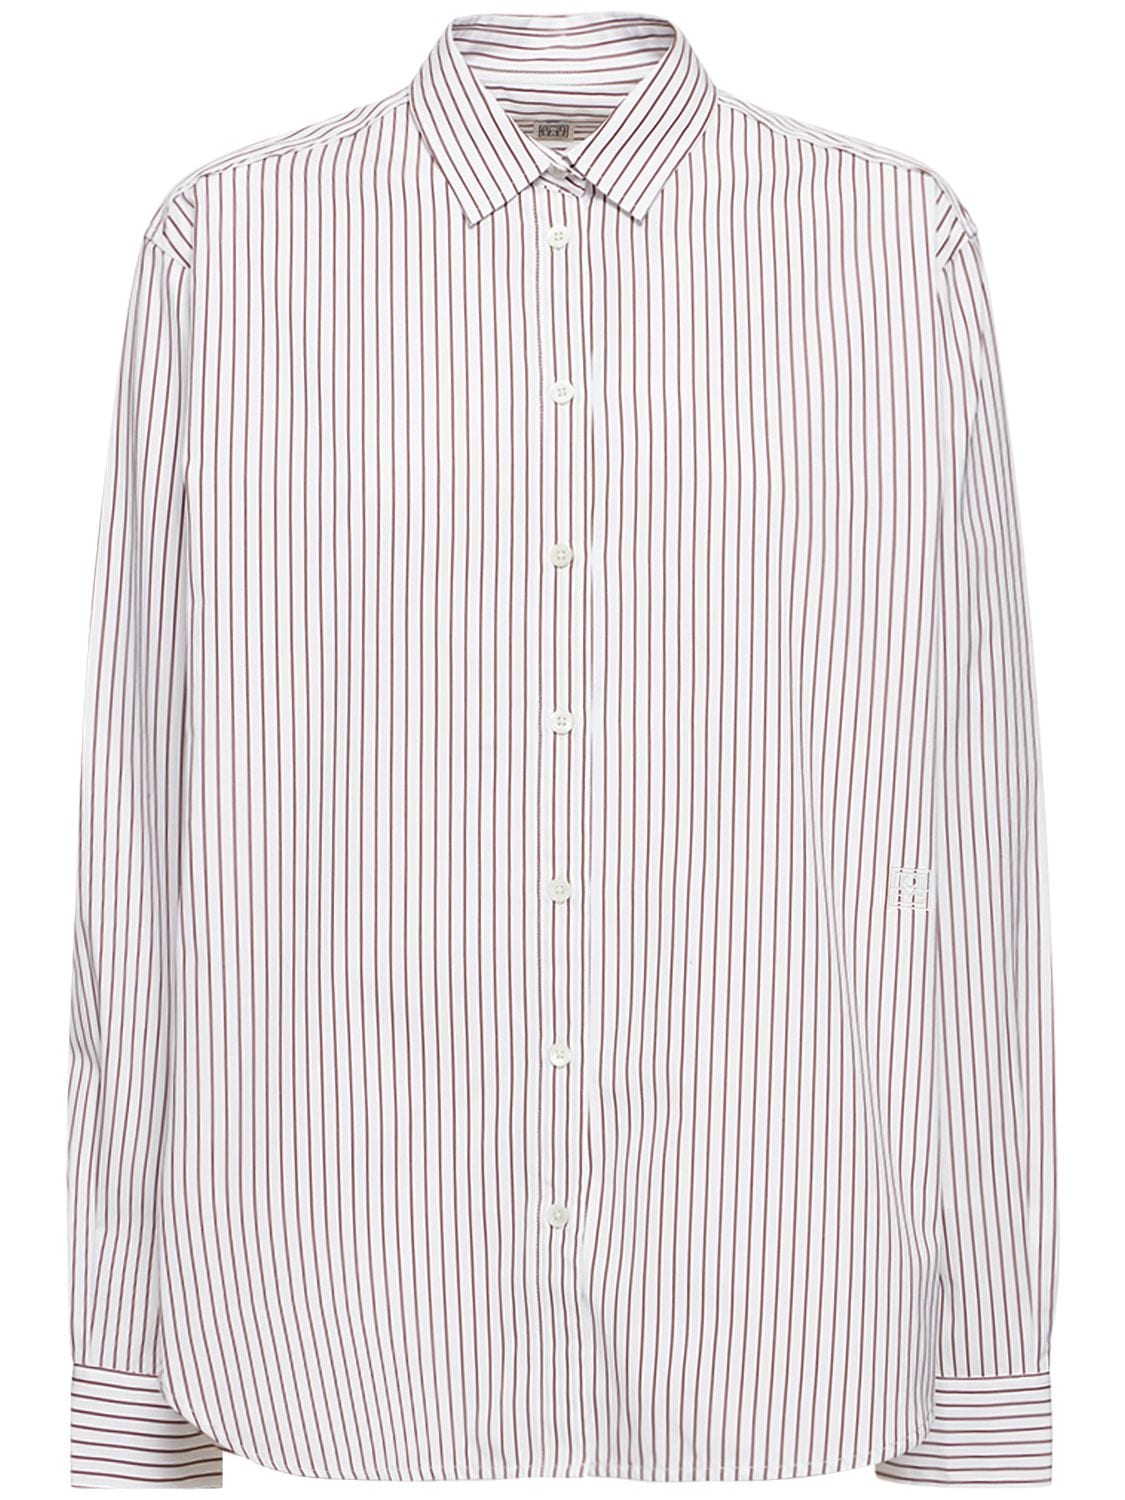 Image of Signature Striped Cotton Shirt